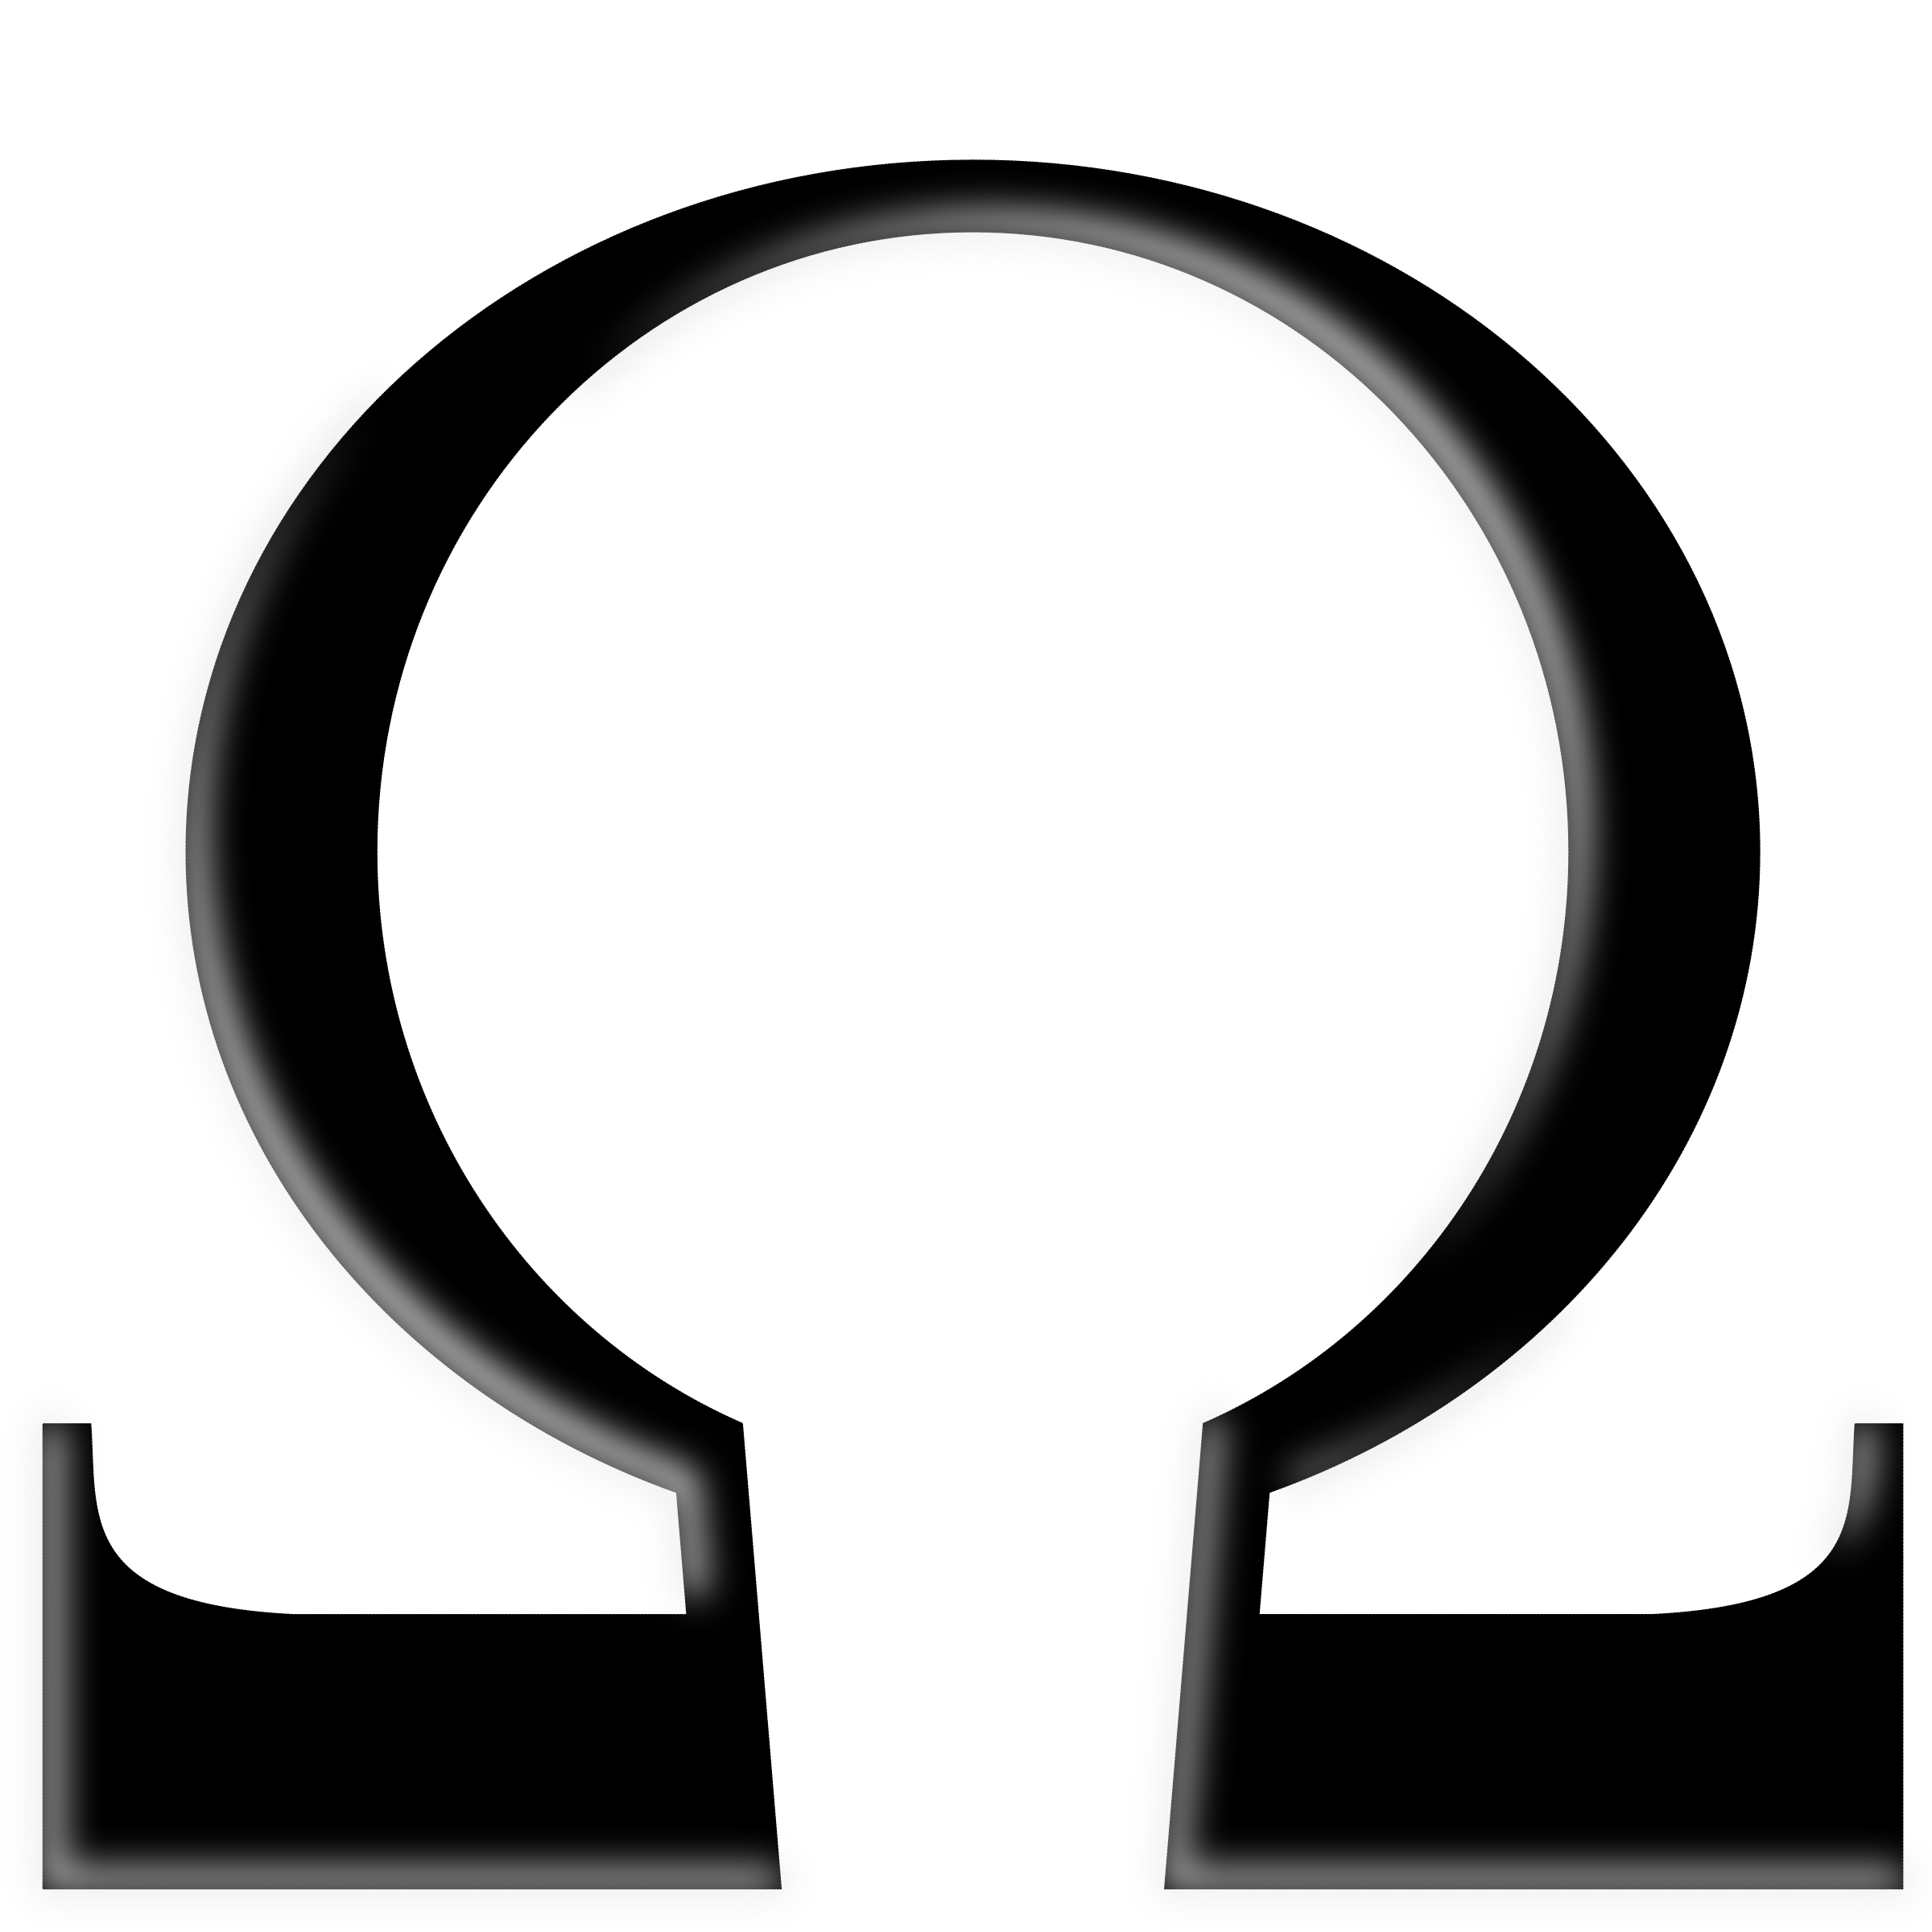 Omega Ohm Symbol vector clipart image - Free stock photo - Public